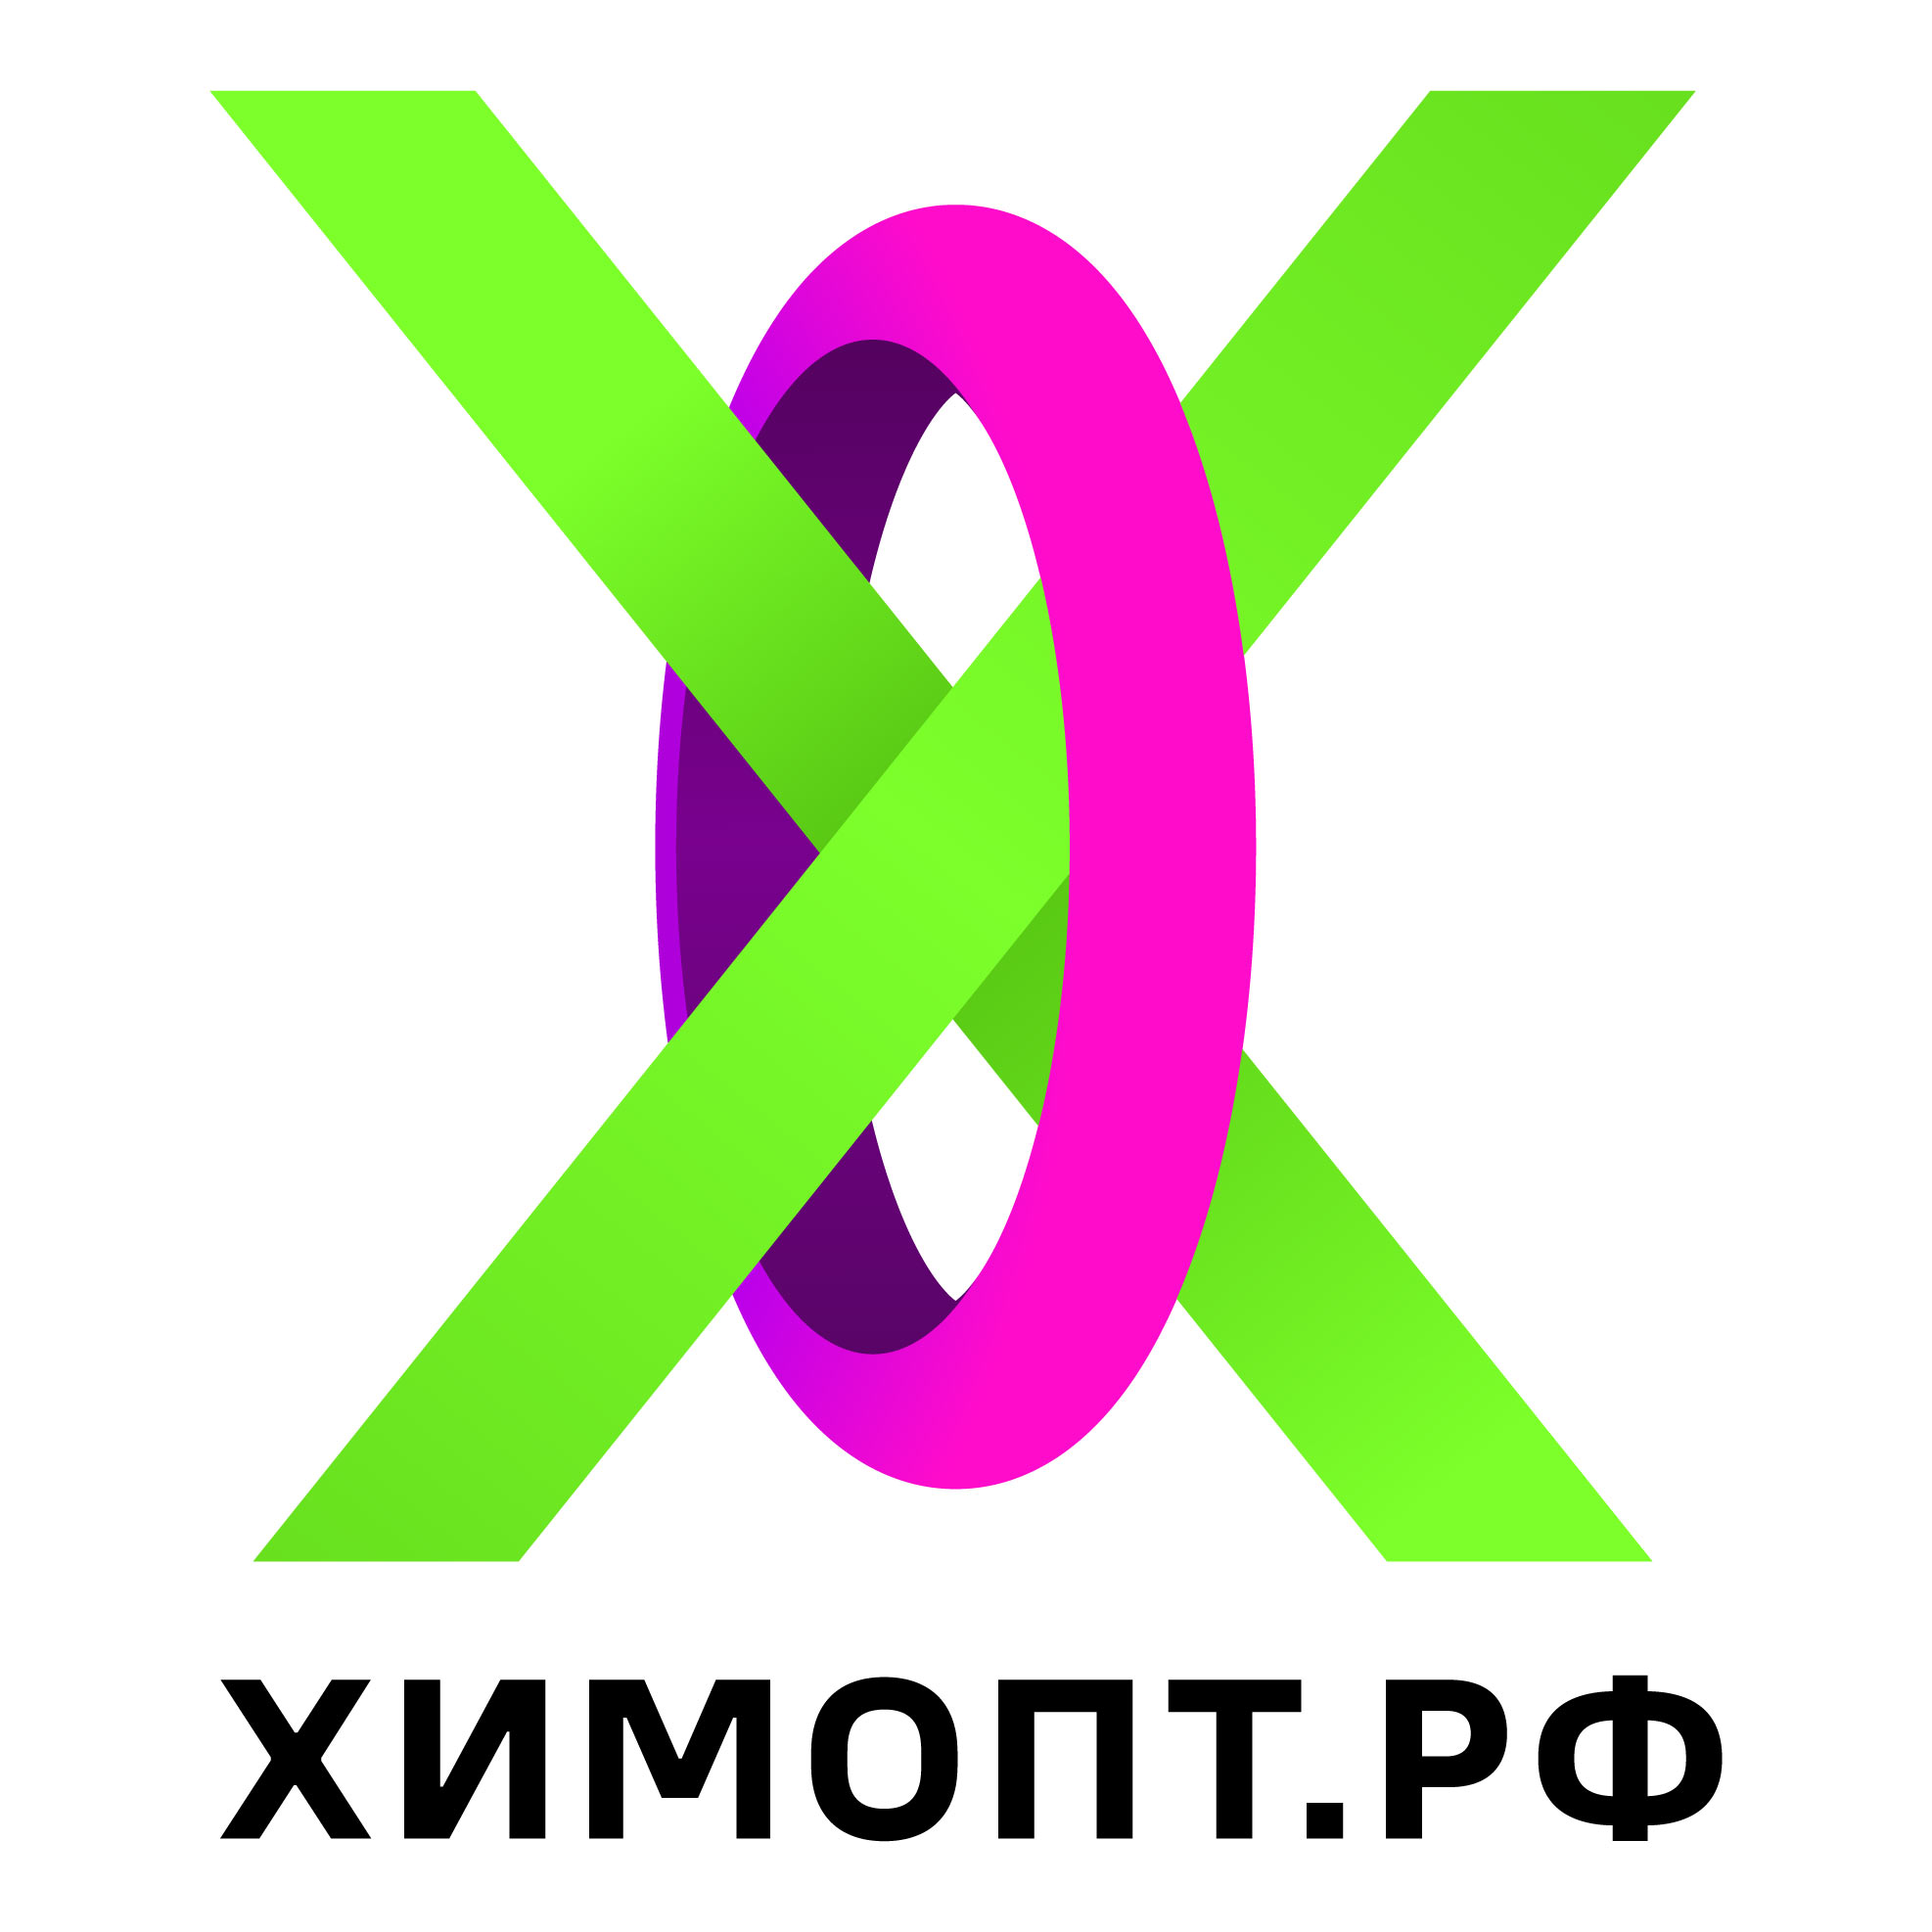 himopt logo